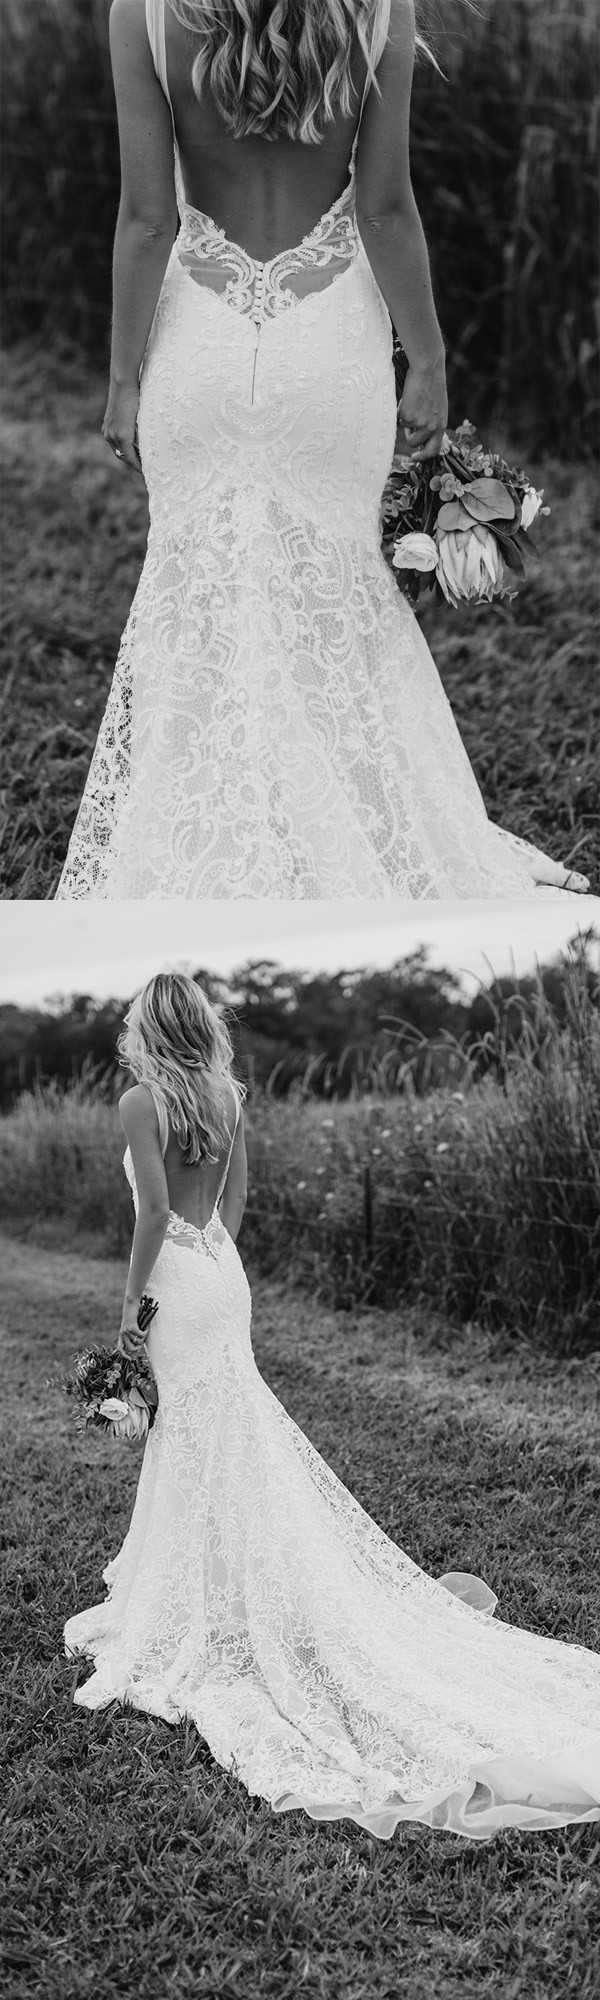 Low Back Wedding Dresses
 20 Stunning Open & Low Back Wedding Dresses For 2017